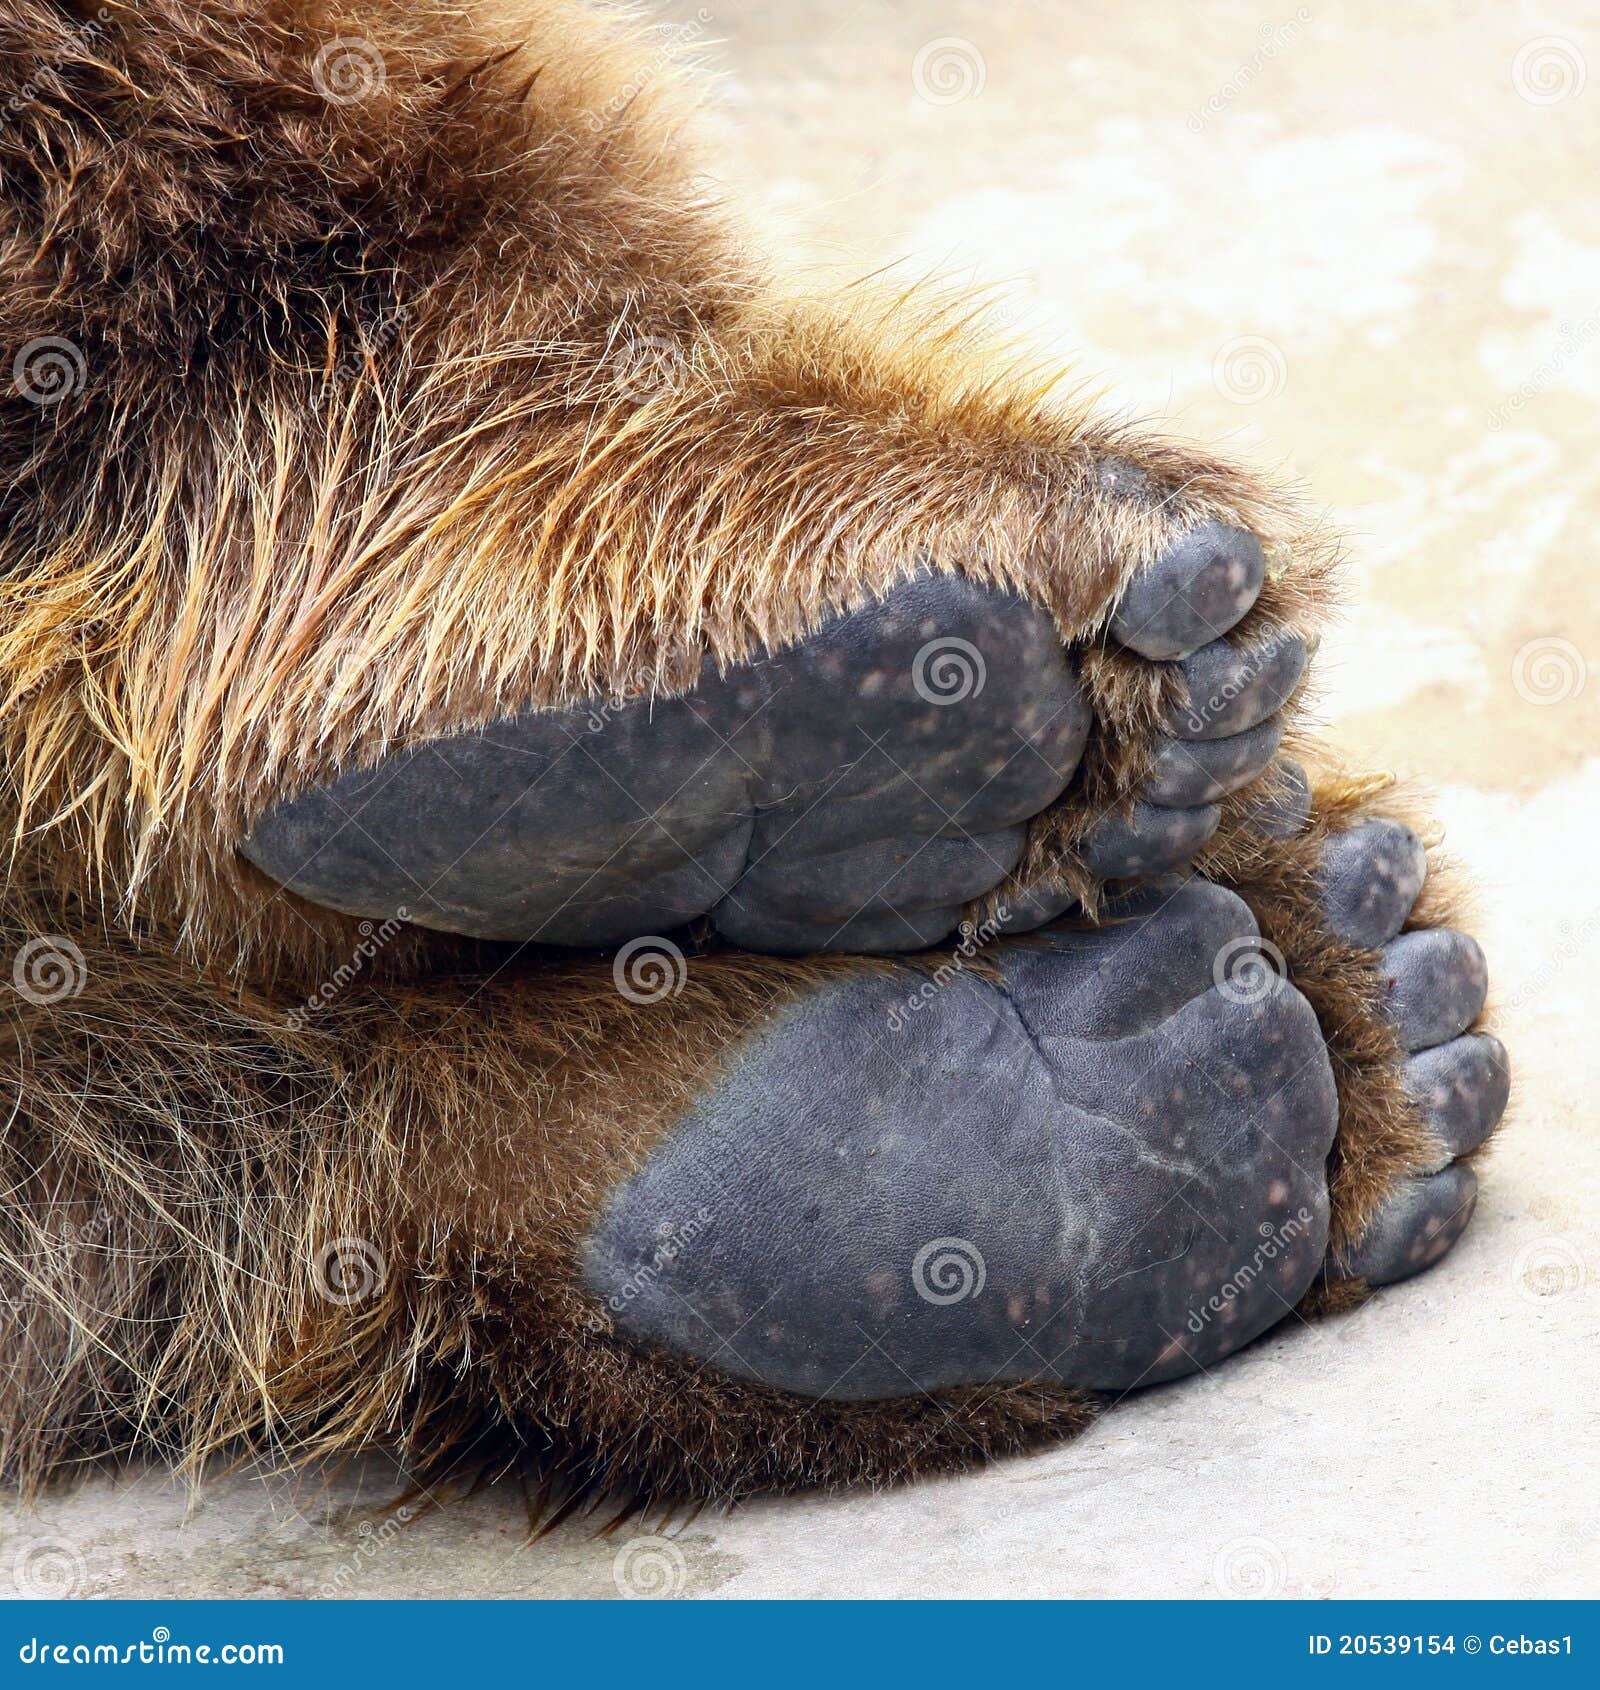 bear feet